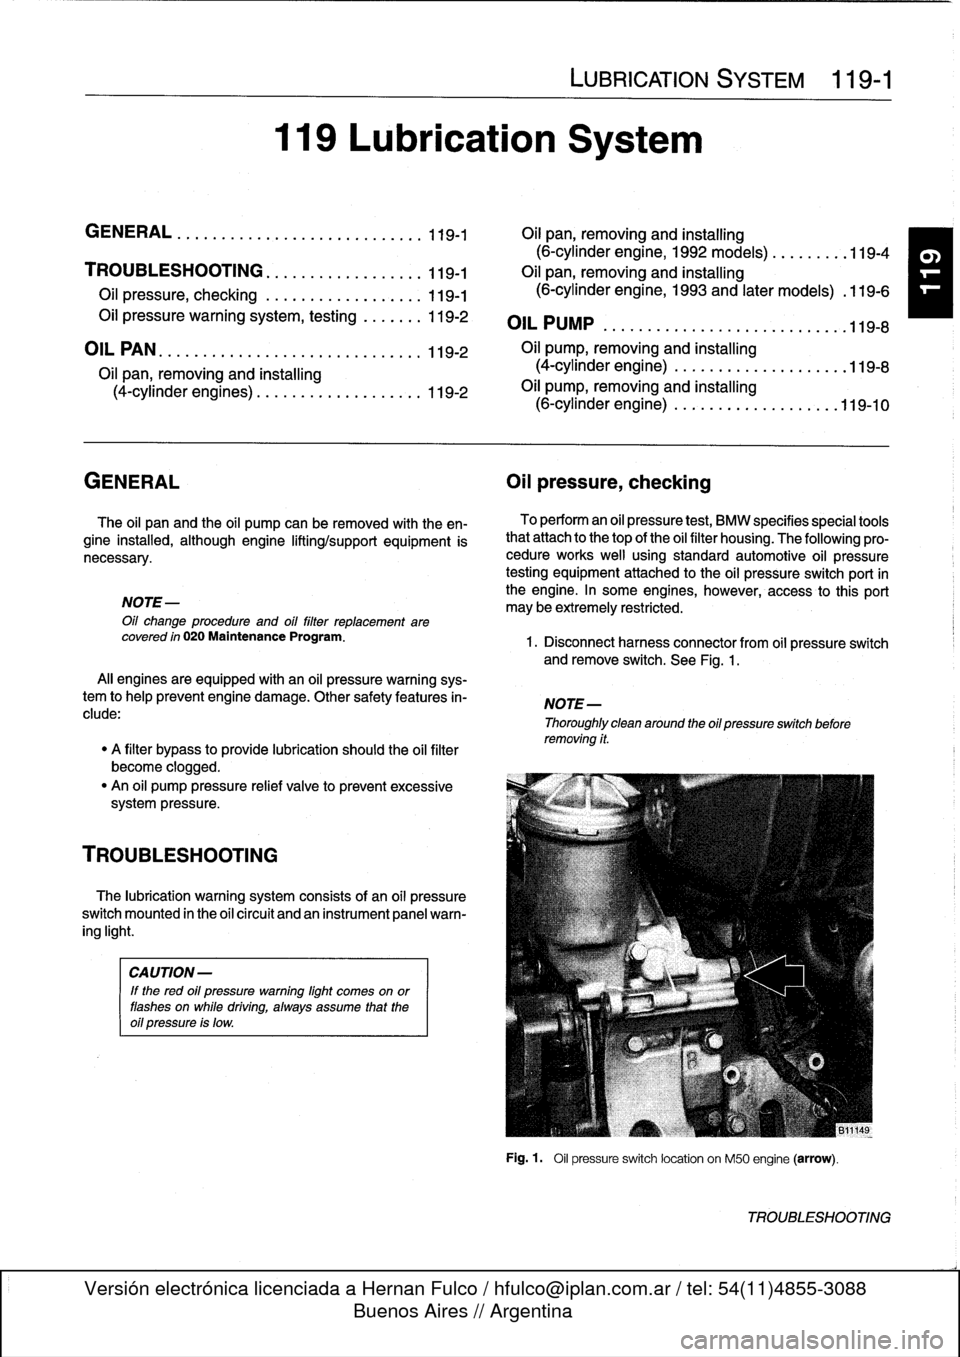 BMW M3 1995 E36 Workshop Manual 
119
Lubrication
System

LUBRICATION
SYSTEM

	

119-1

GENERAL
.
.
.
.
.
.
...
.
.
.
.
.
.
.
...,
,
...
.
.
.
.
119-1

	

OH
pan,
removing
and
installing

(6-cylinder
engine,
1992
models)
.
.
.
.
.
.
